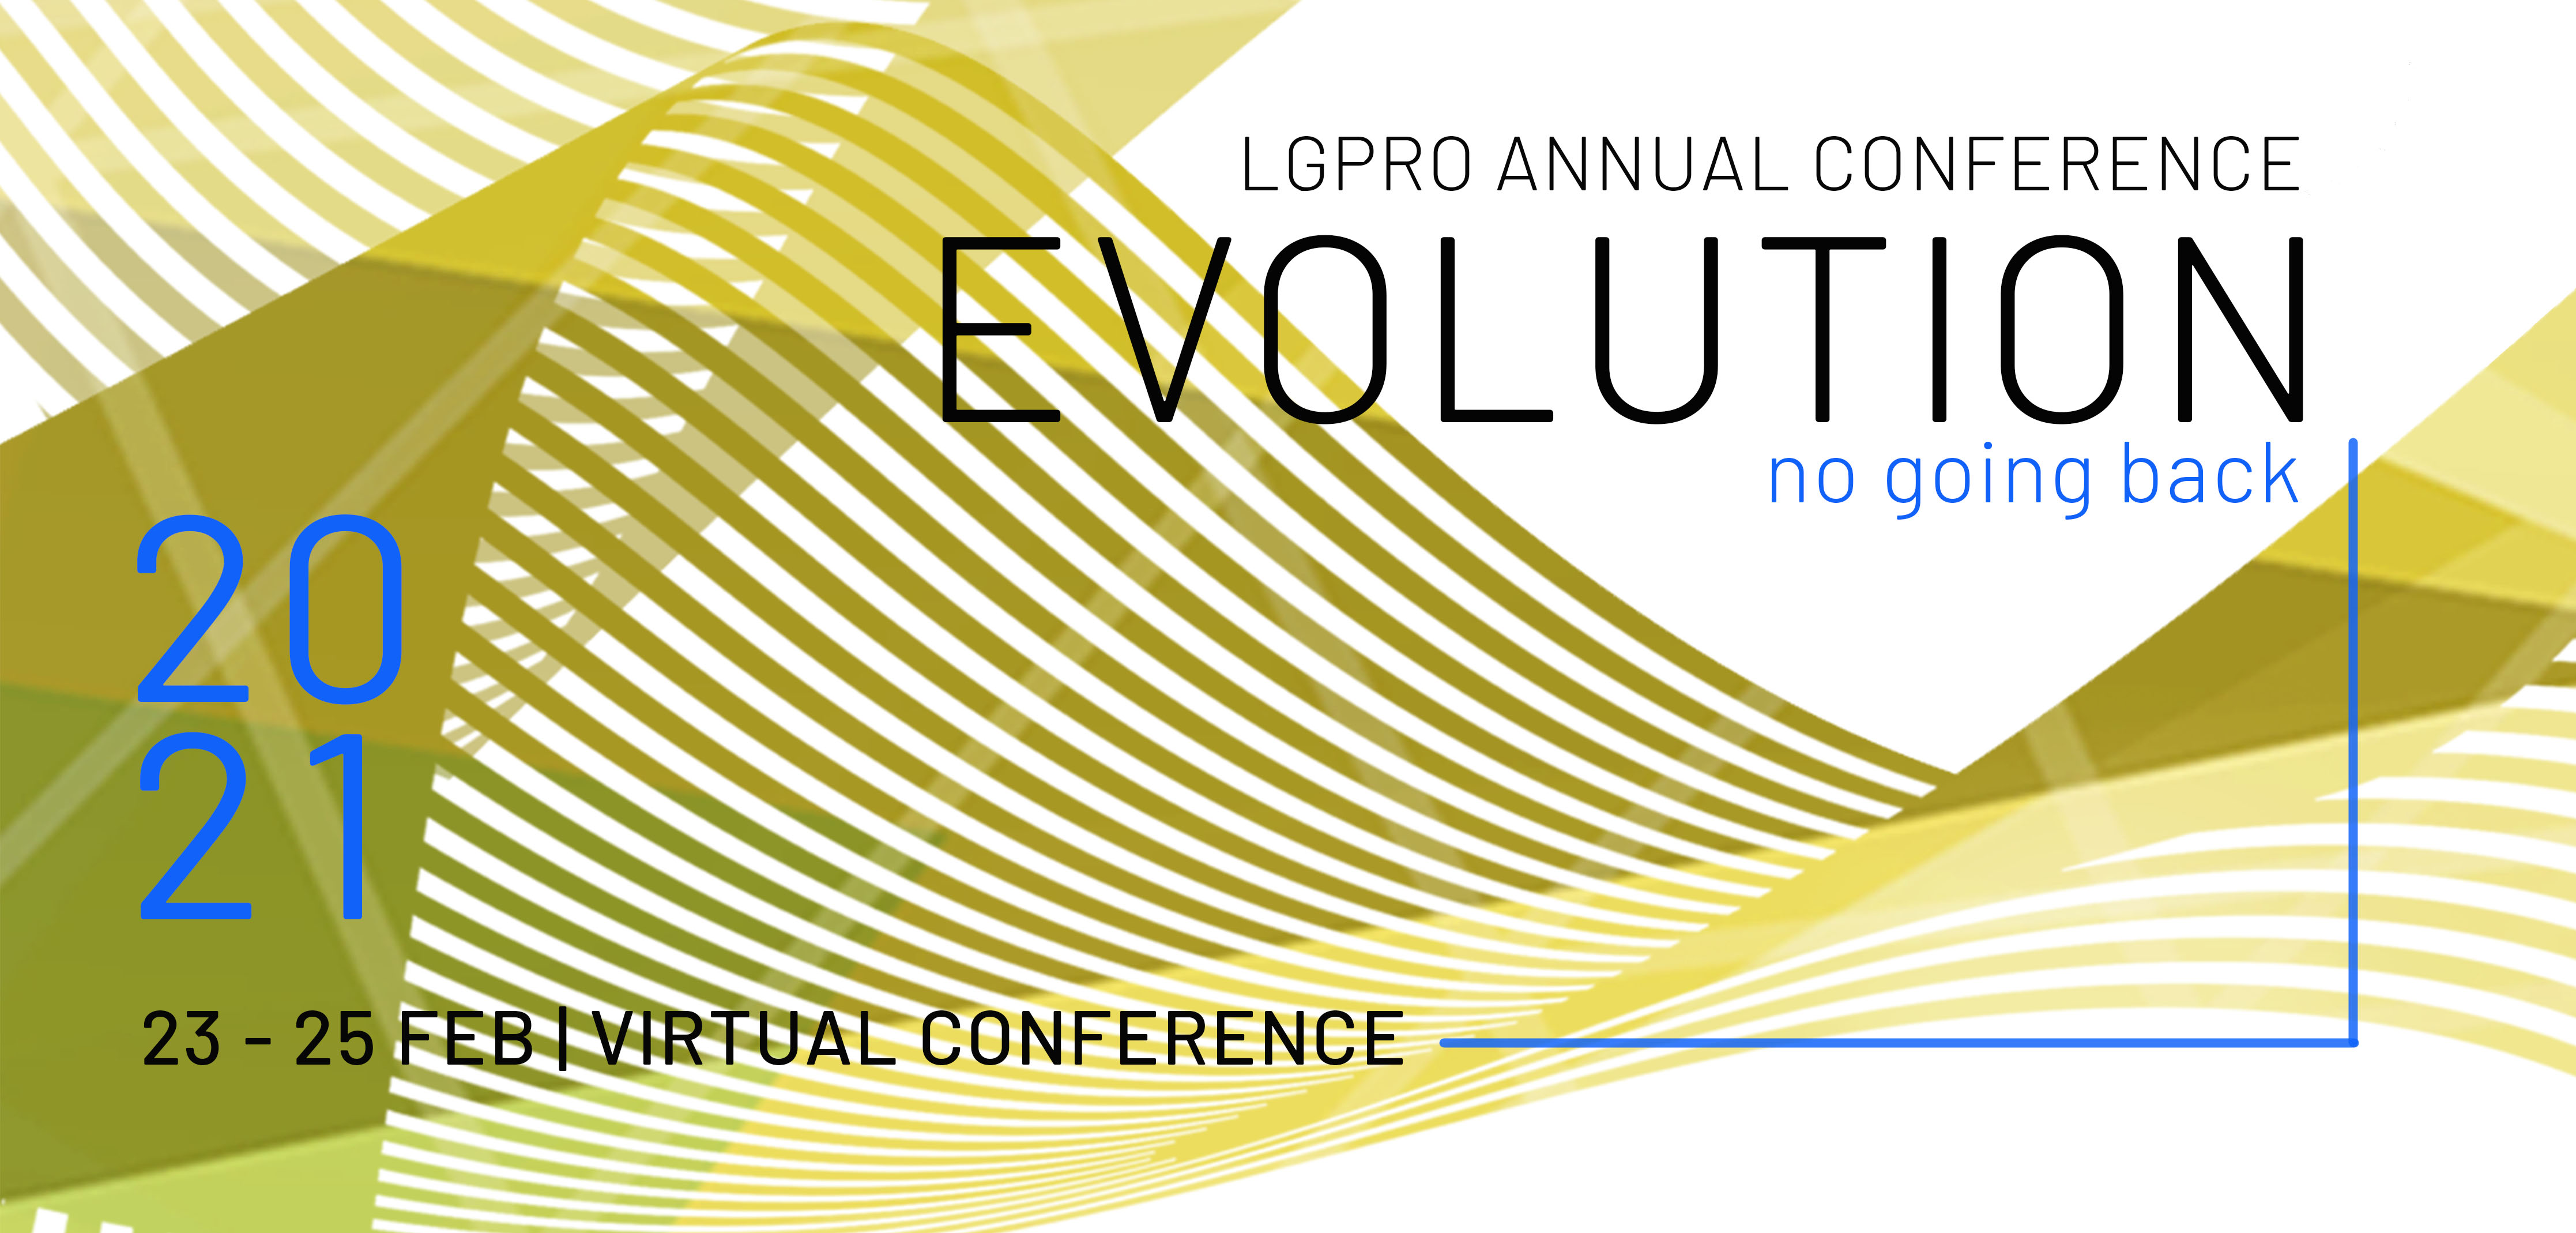 Annual Conference 2021 - Evolution